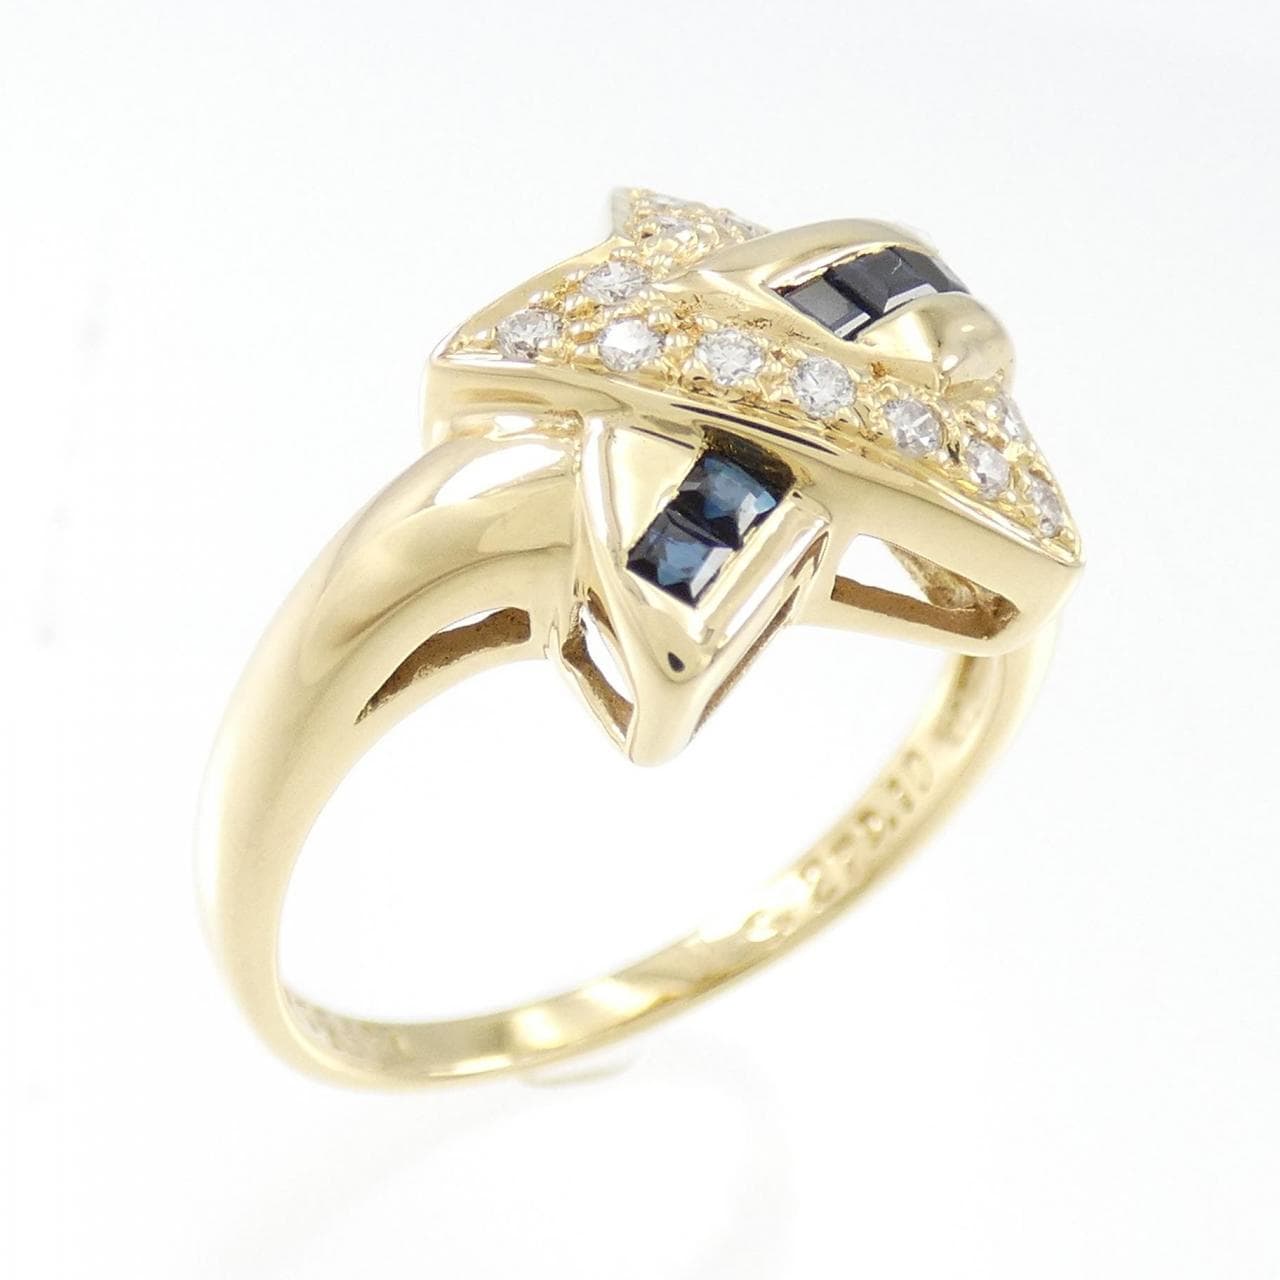 K18YG Star Sapphire Ring 0.27CT